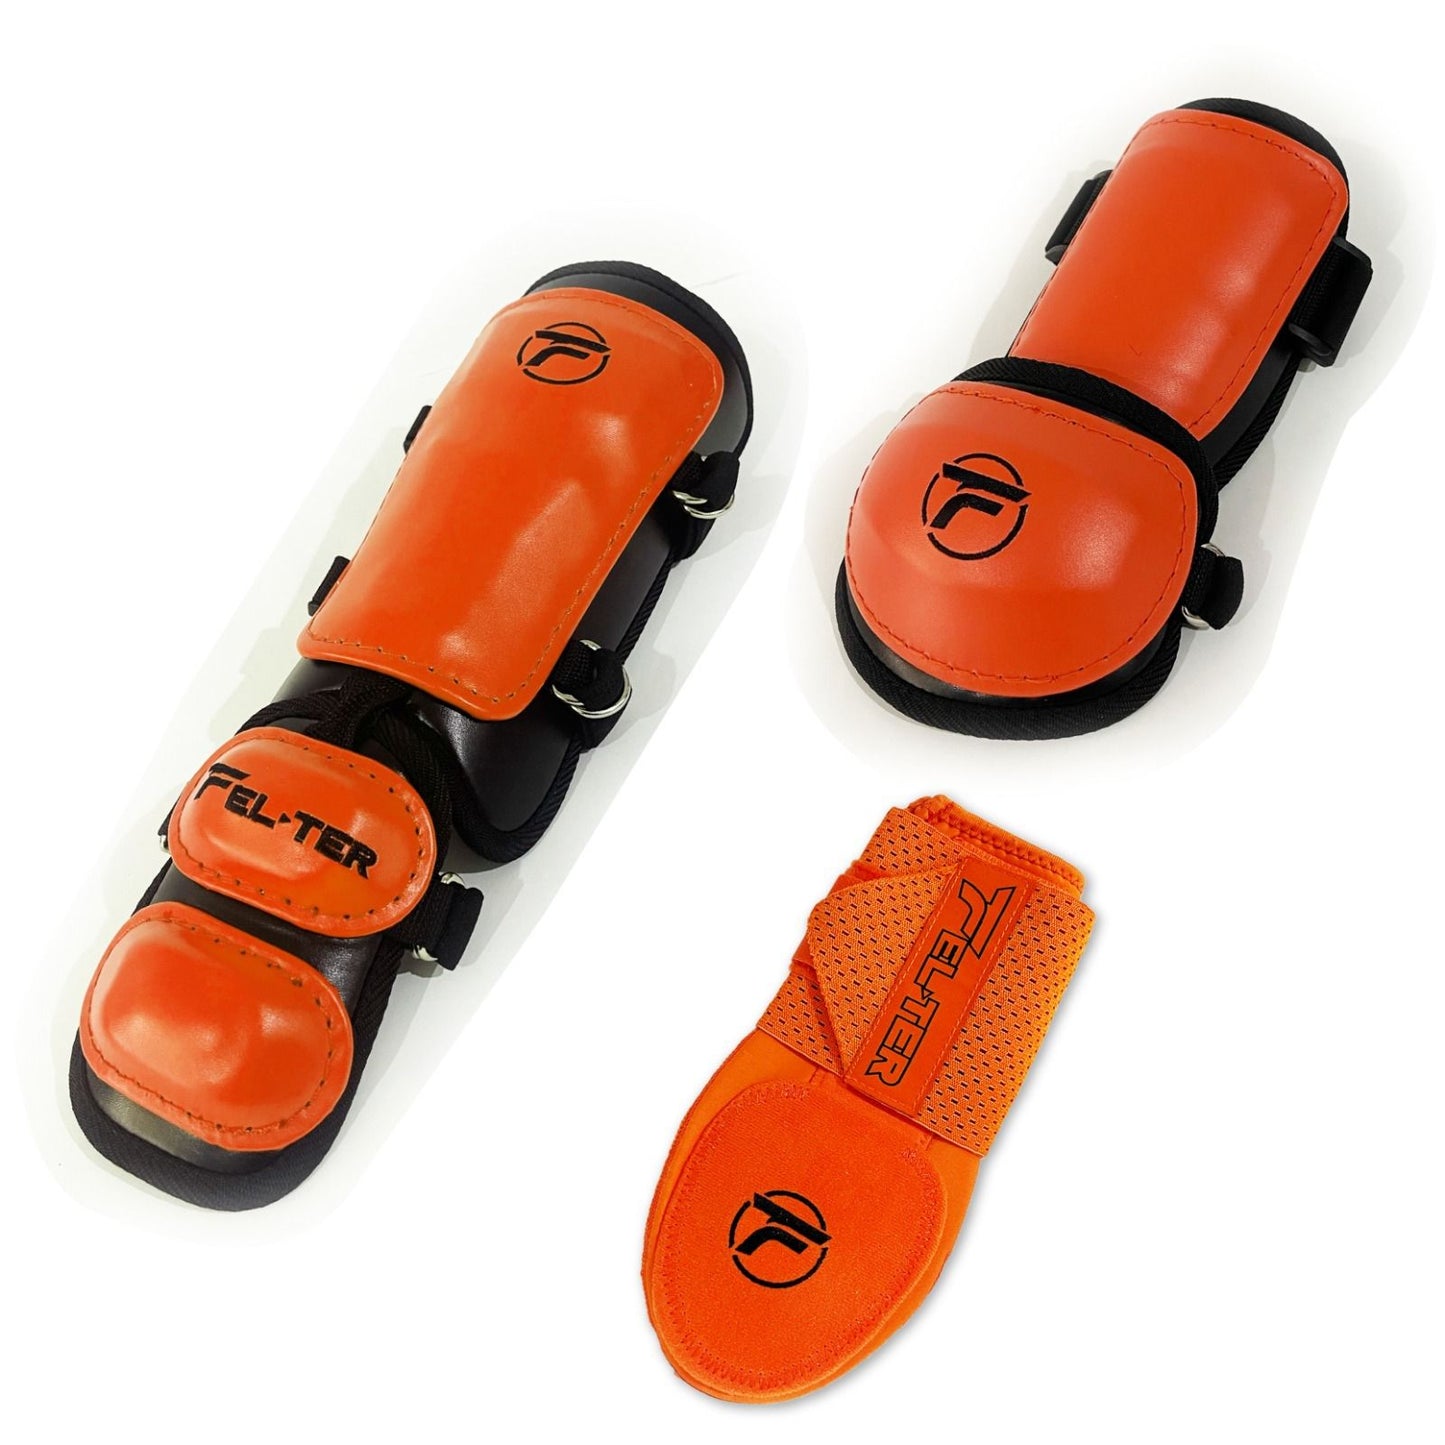 Kit 3 Piezas Protecciones De Bateo Broche + Slidding Glove Adulto